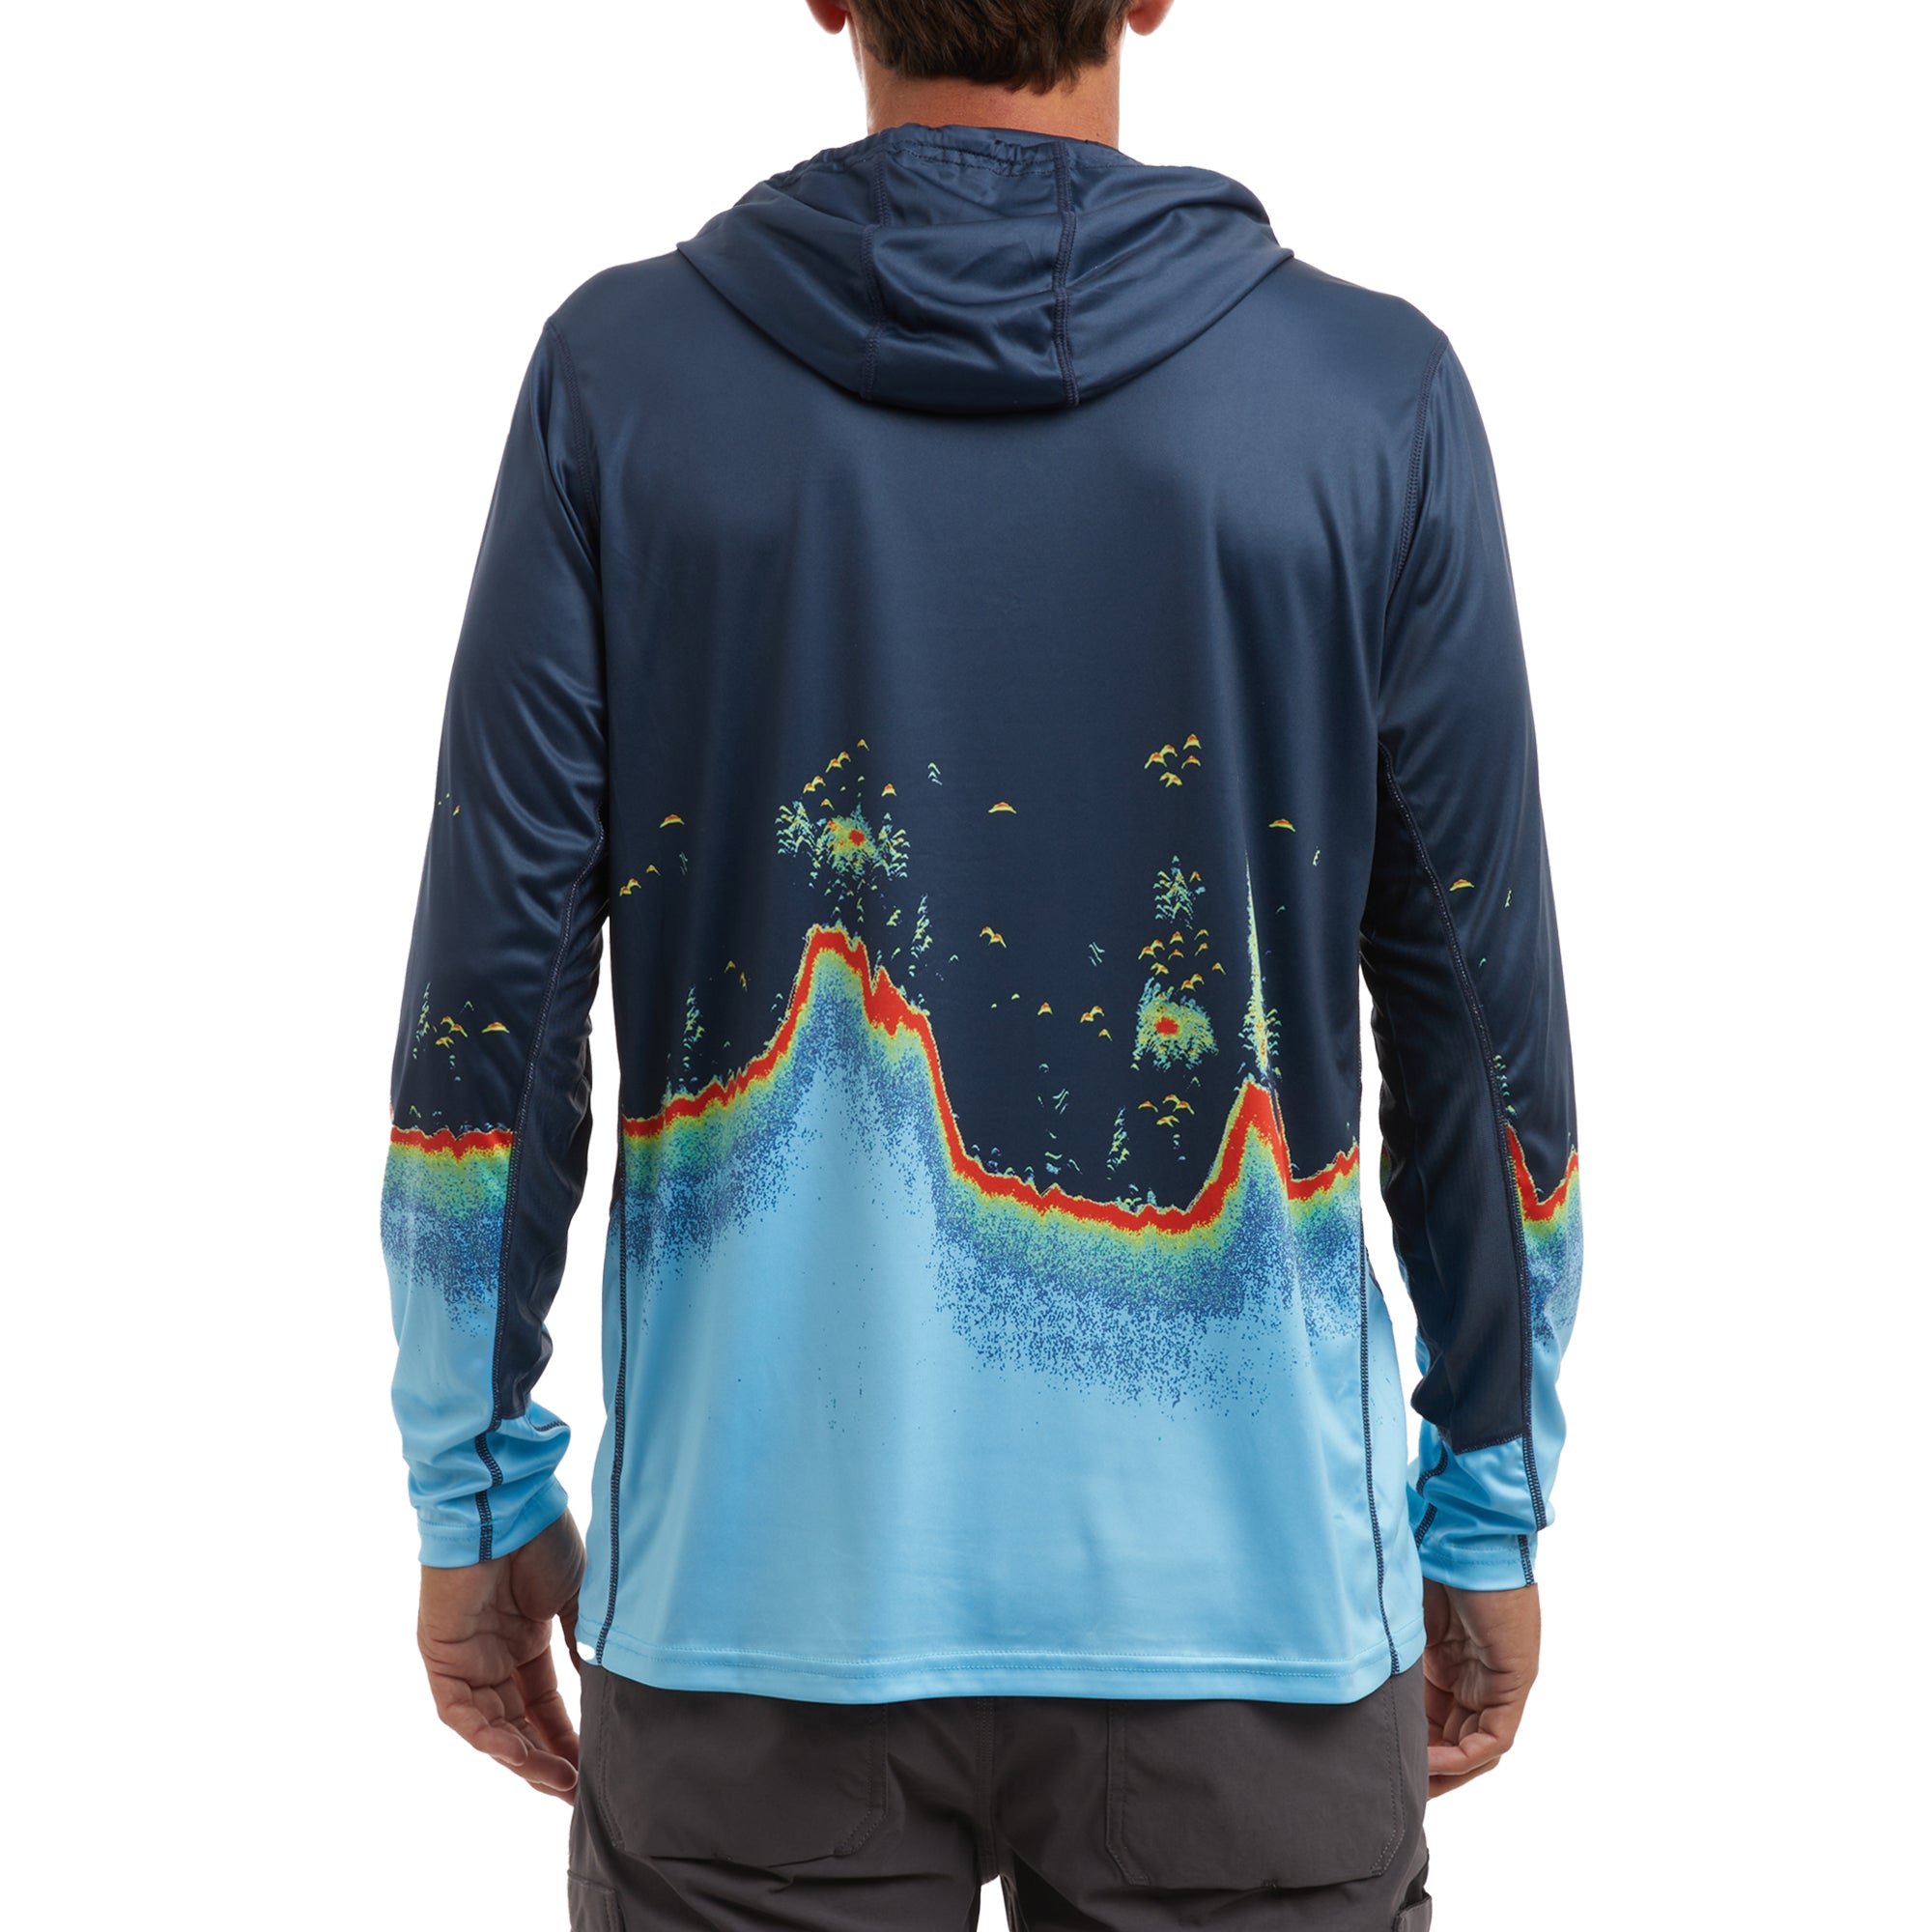 Lake Mead Store: Pelagic VaporTek Hexed Performance Fishing Shirt for Men -  Hexed Aqua - XL